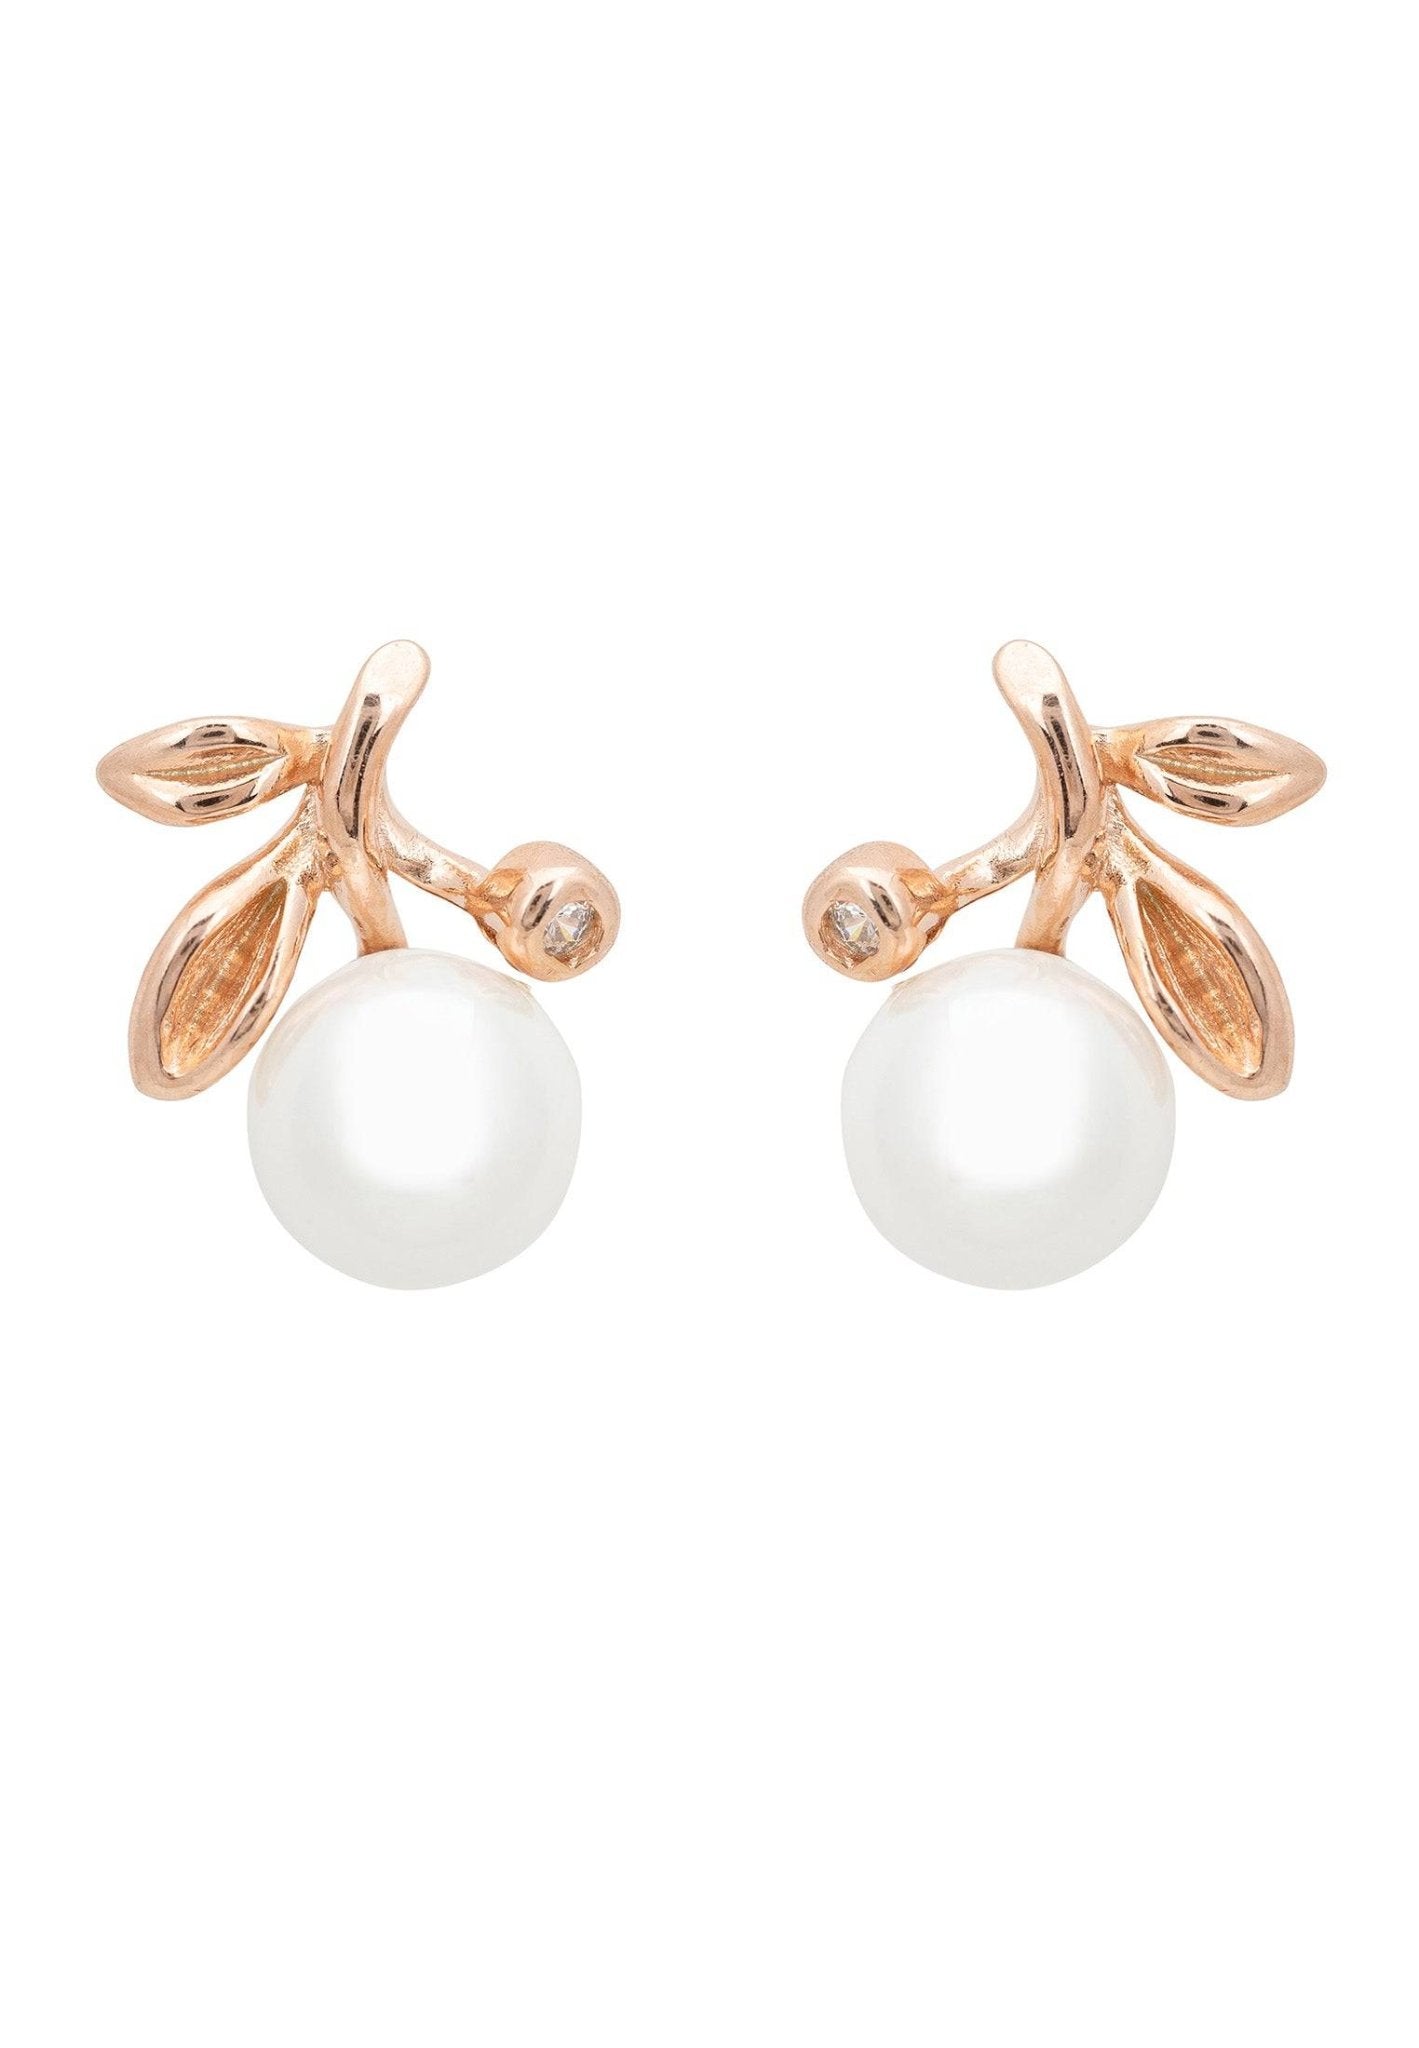 Rosebud Pearl Stud Earrings Rosegold - LATELITA Earrings